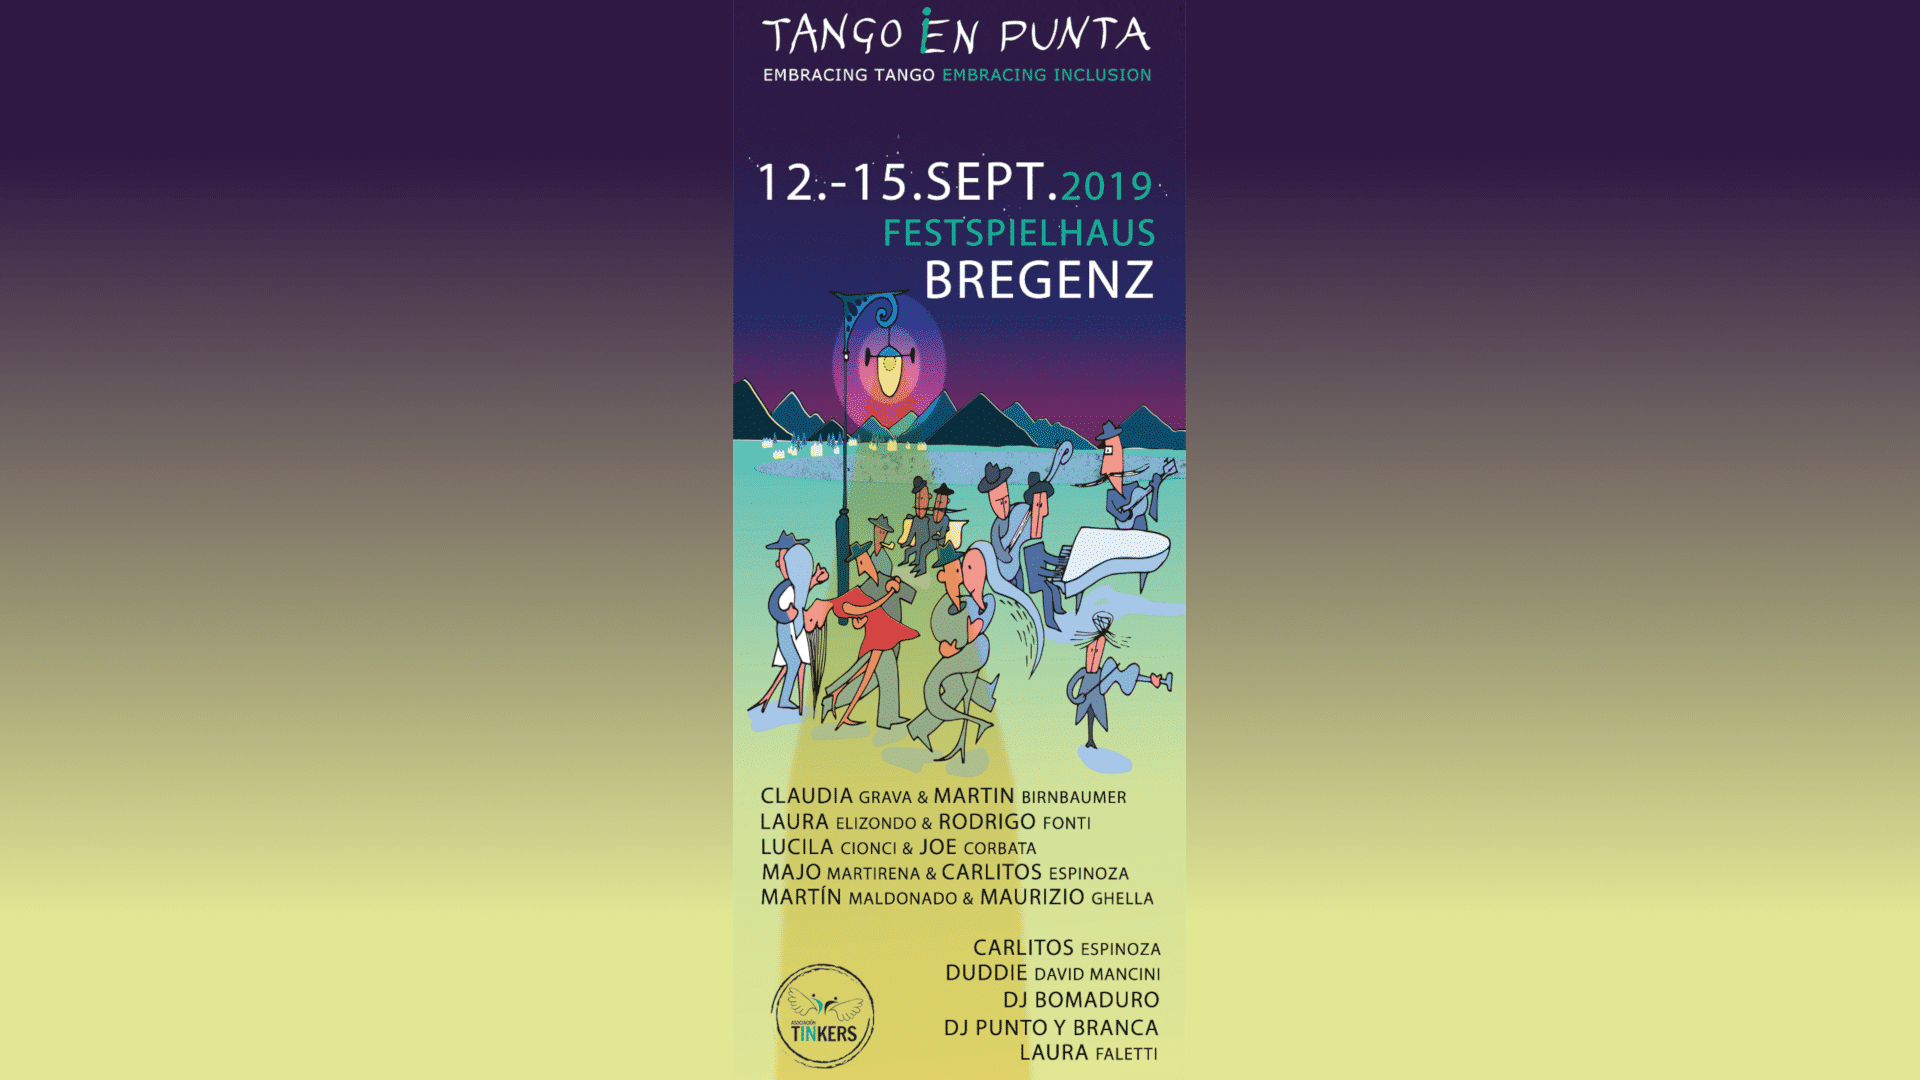 Tango En Punta Bregenz 2019 event picture